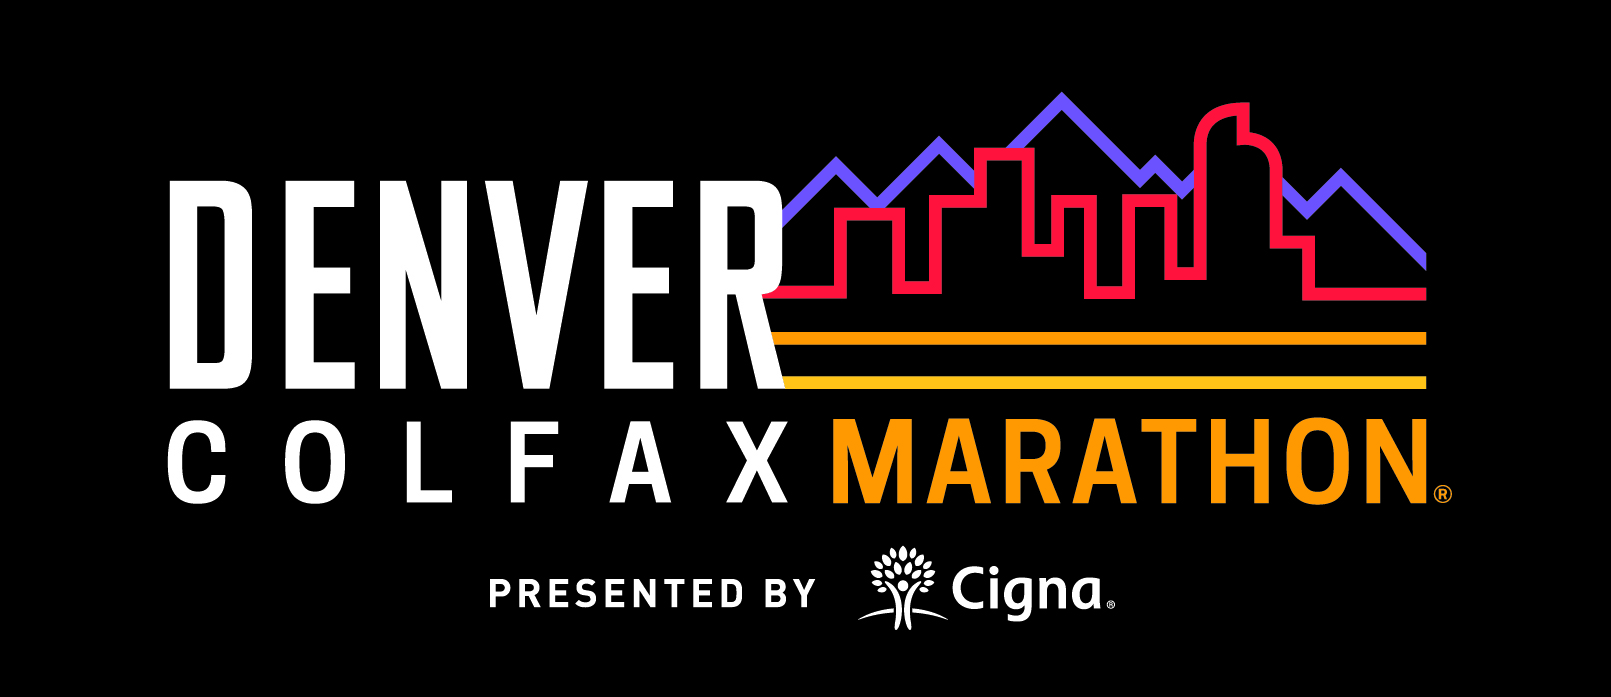 Denver Colfax Marathon Unveils New Title Sponsorship with Cigna for